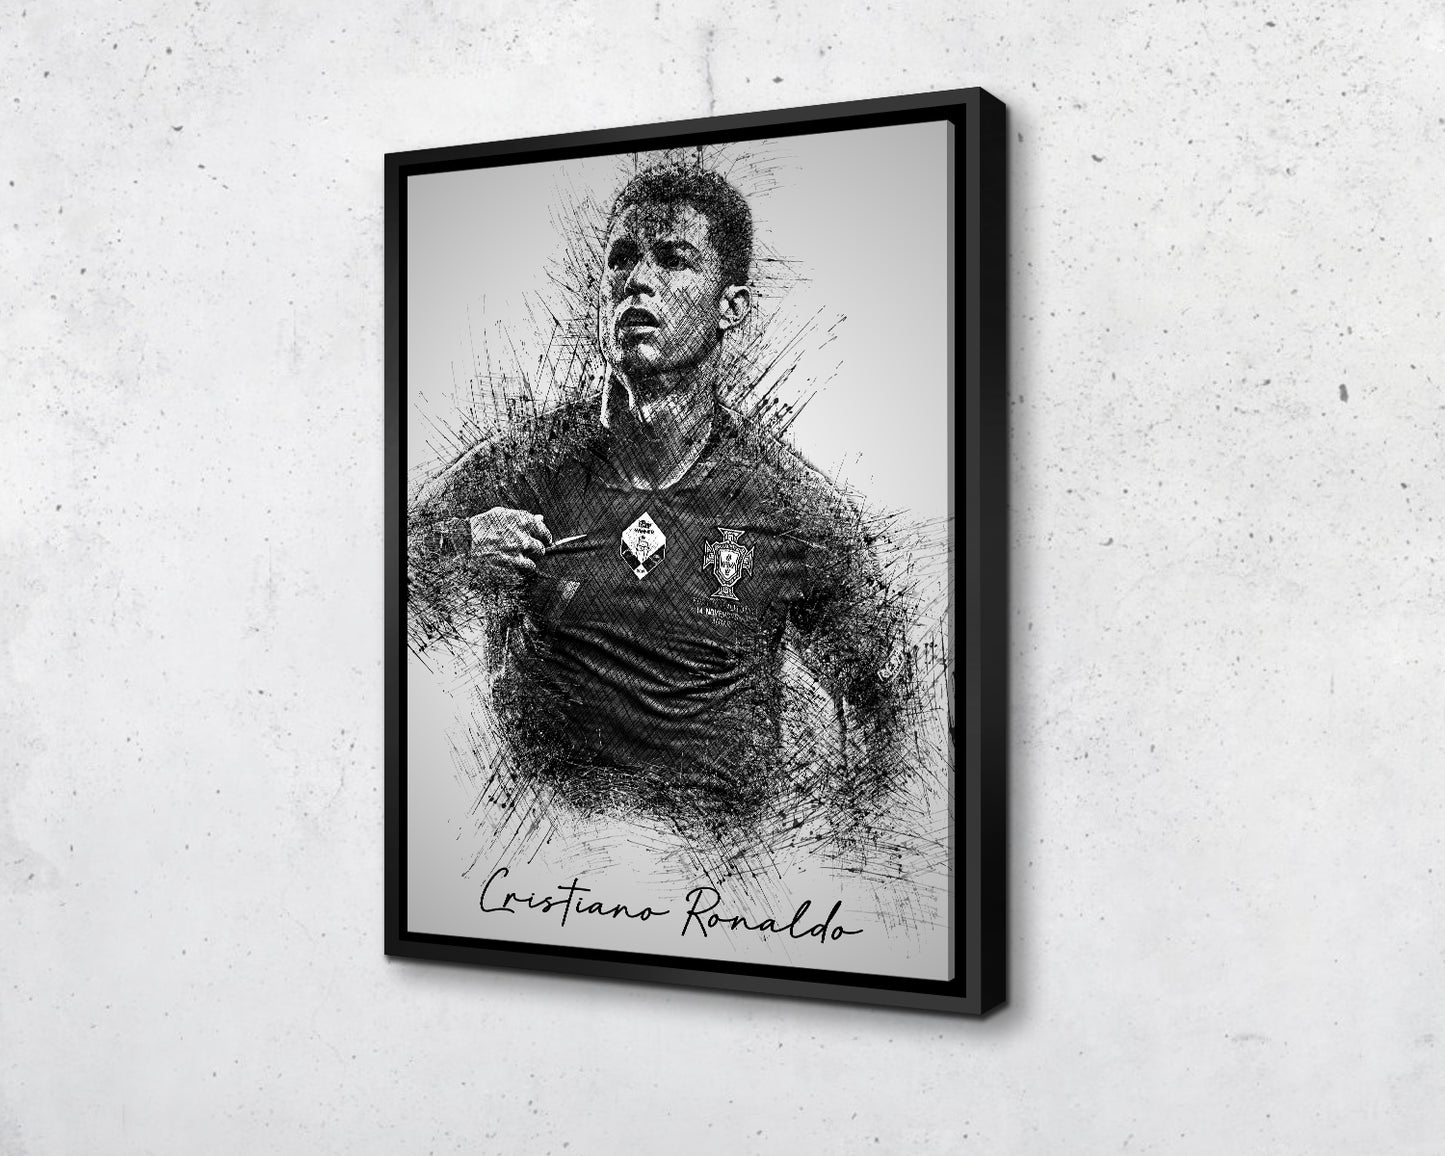 Cristiano Ronaldo Sketch Wall Art